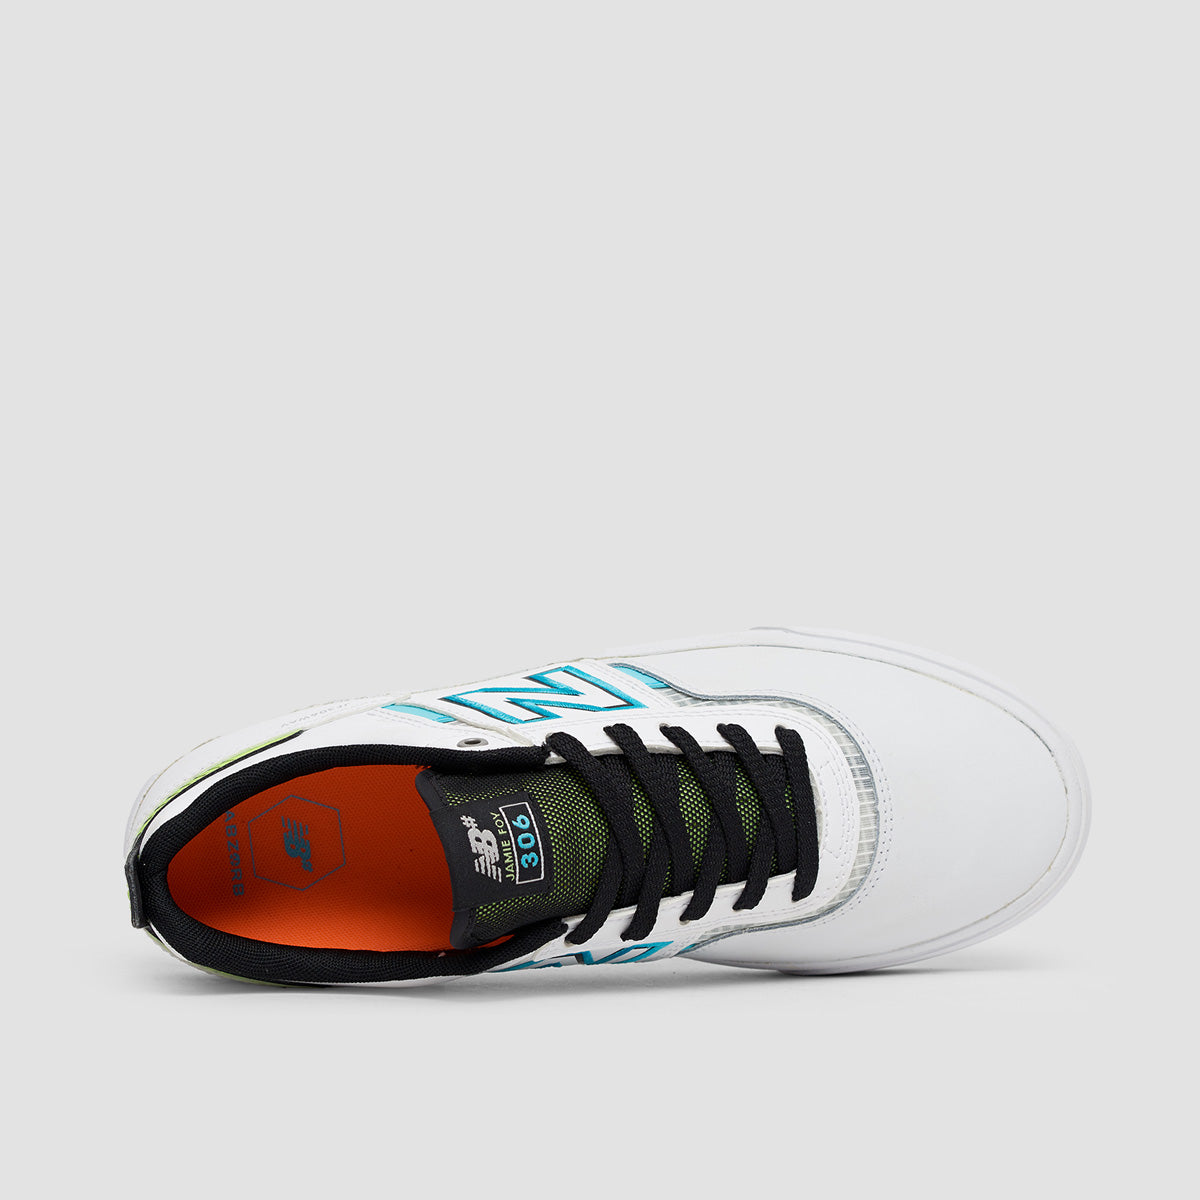 New Balance Jamie Foy 306 Shoes - White/Aqua Sky